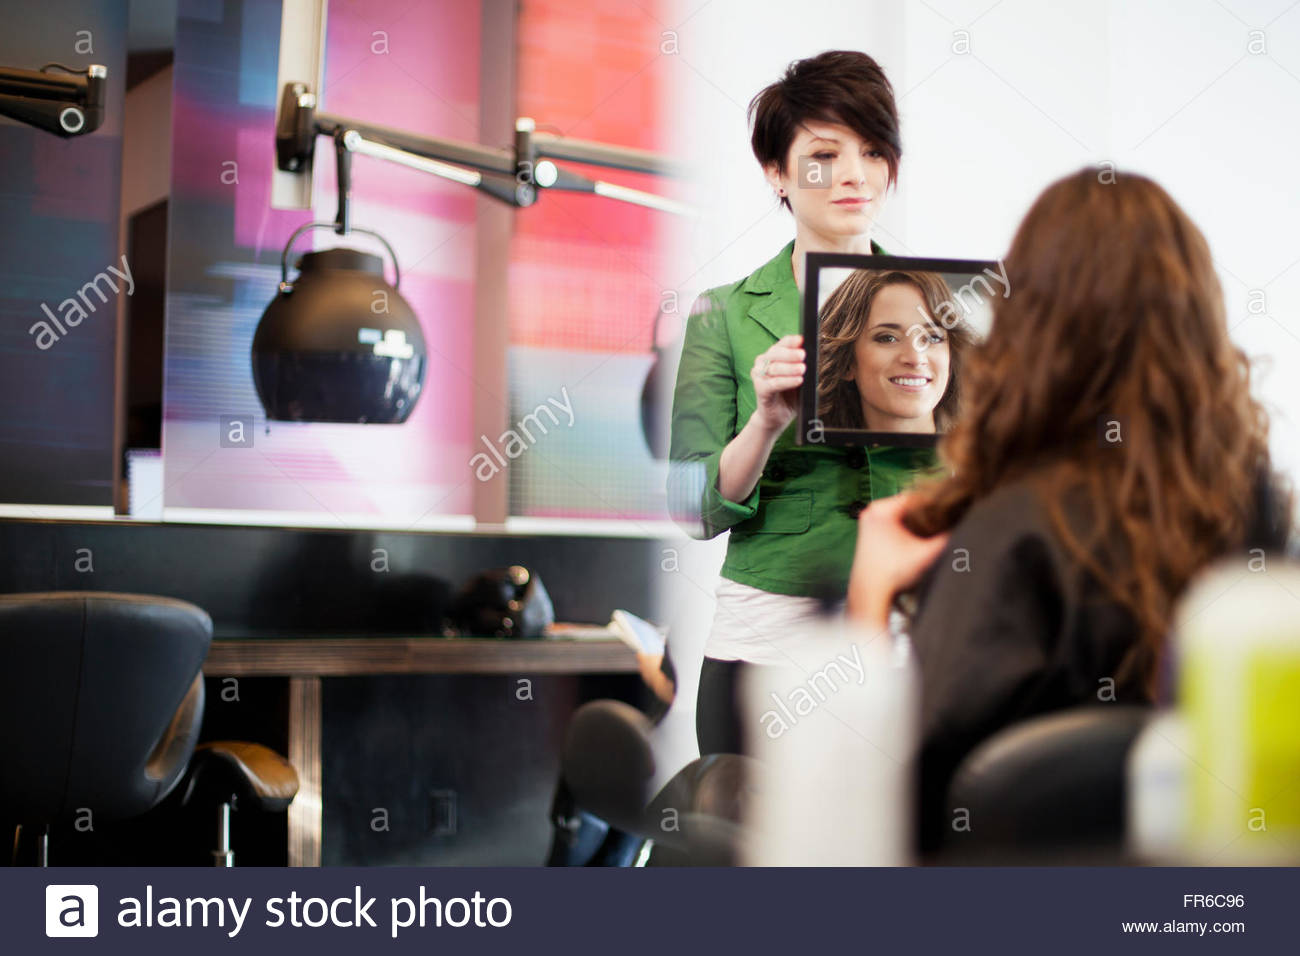 hairstylsts working at hair salon Stock Photo